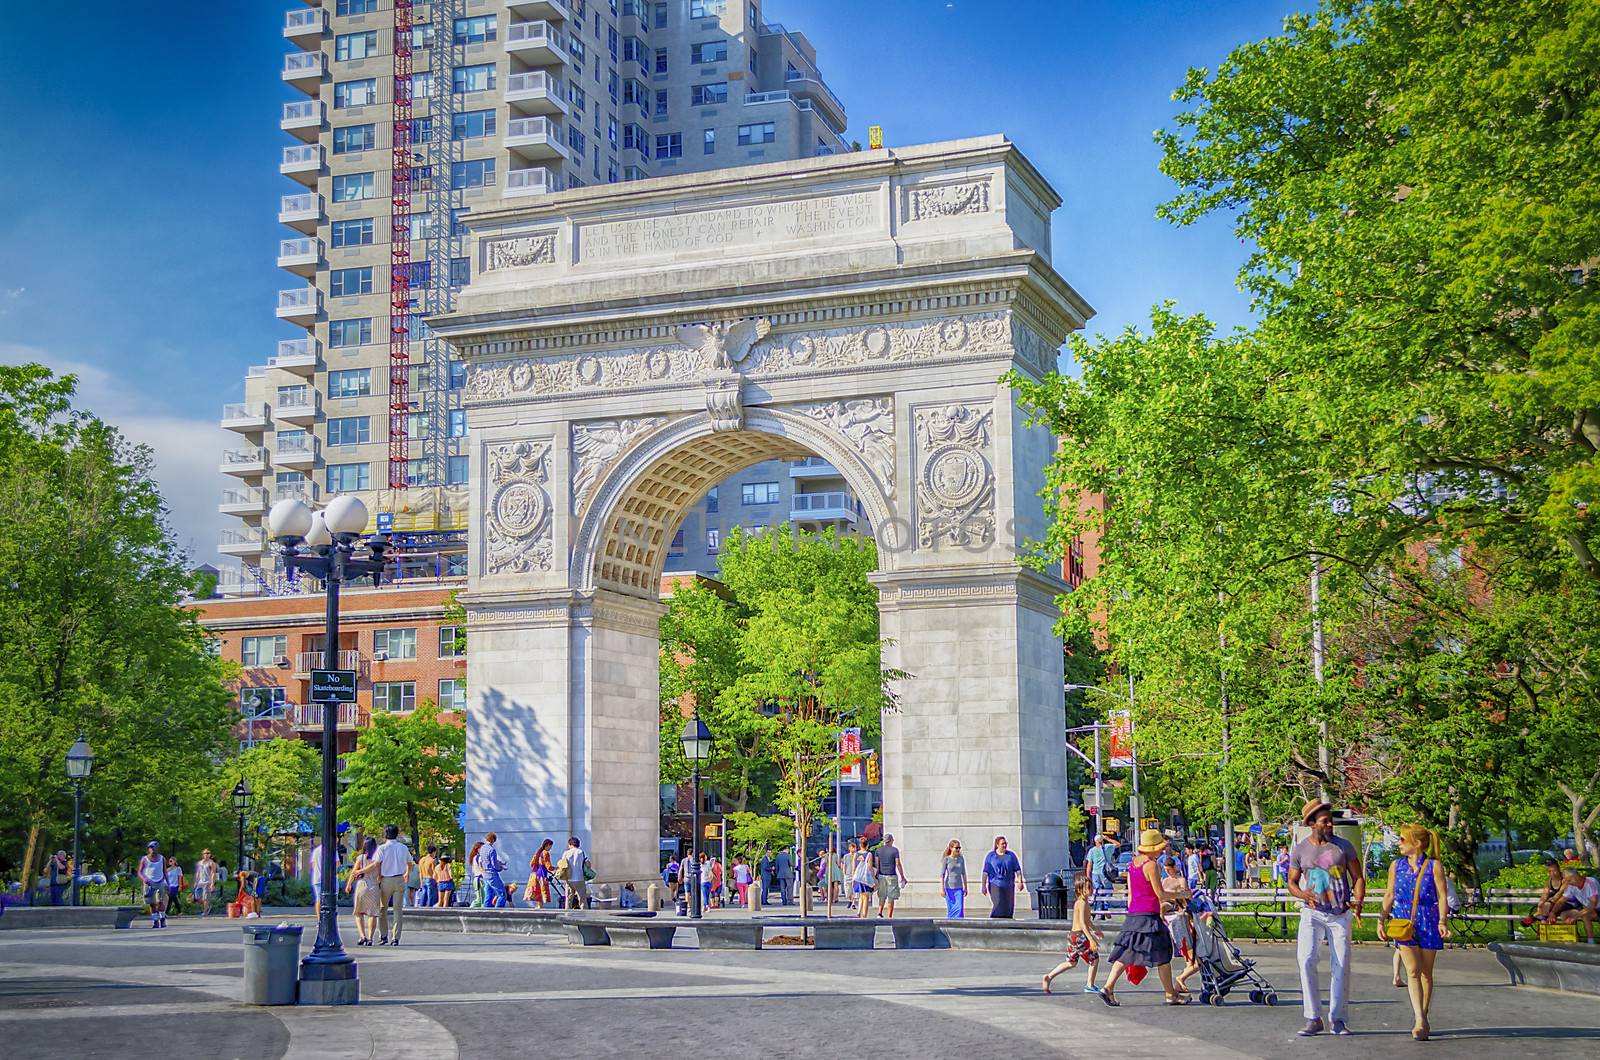 Washington Square Arch, New York City by marcorubino